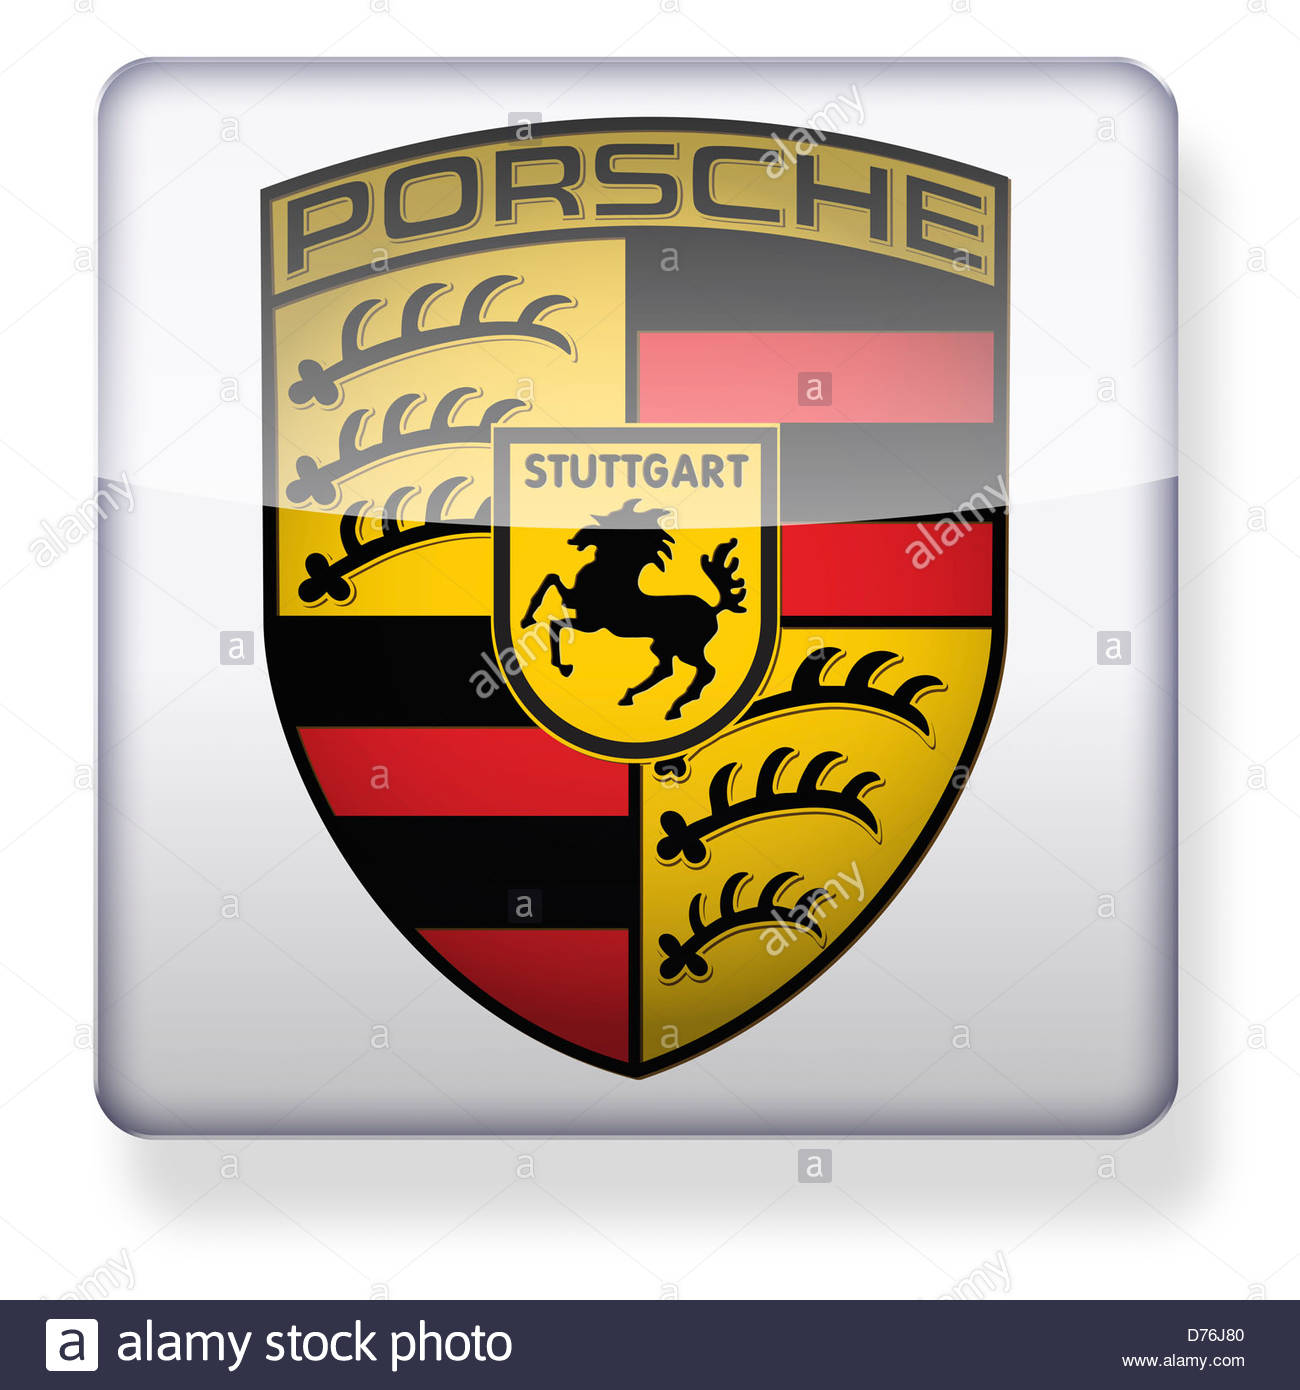 Porsche - Free transport icons